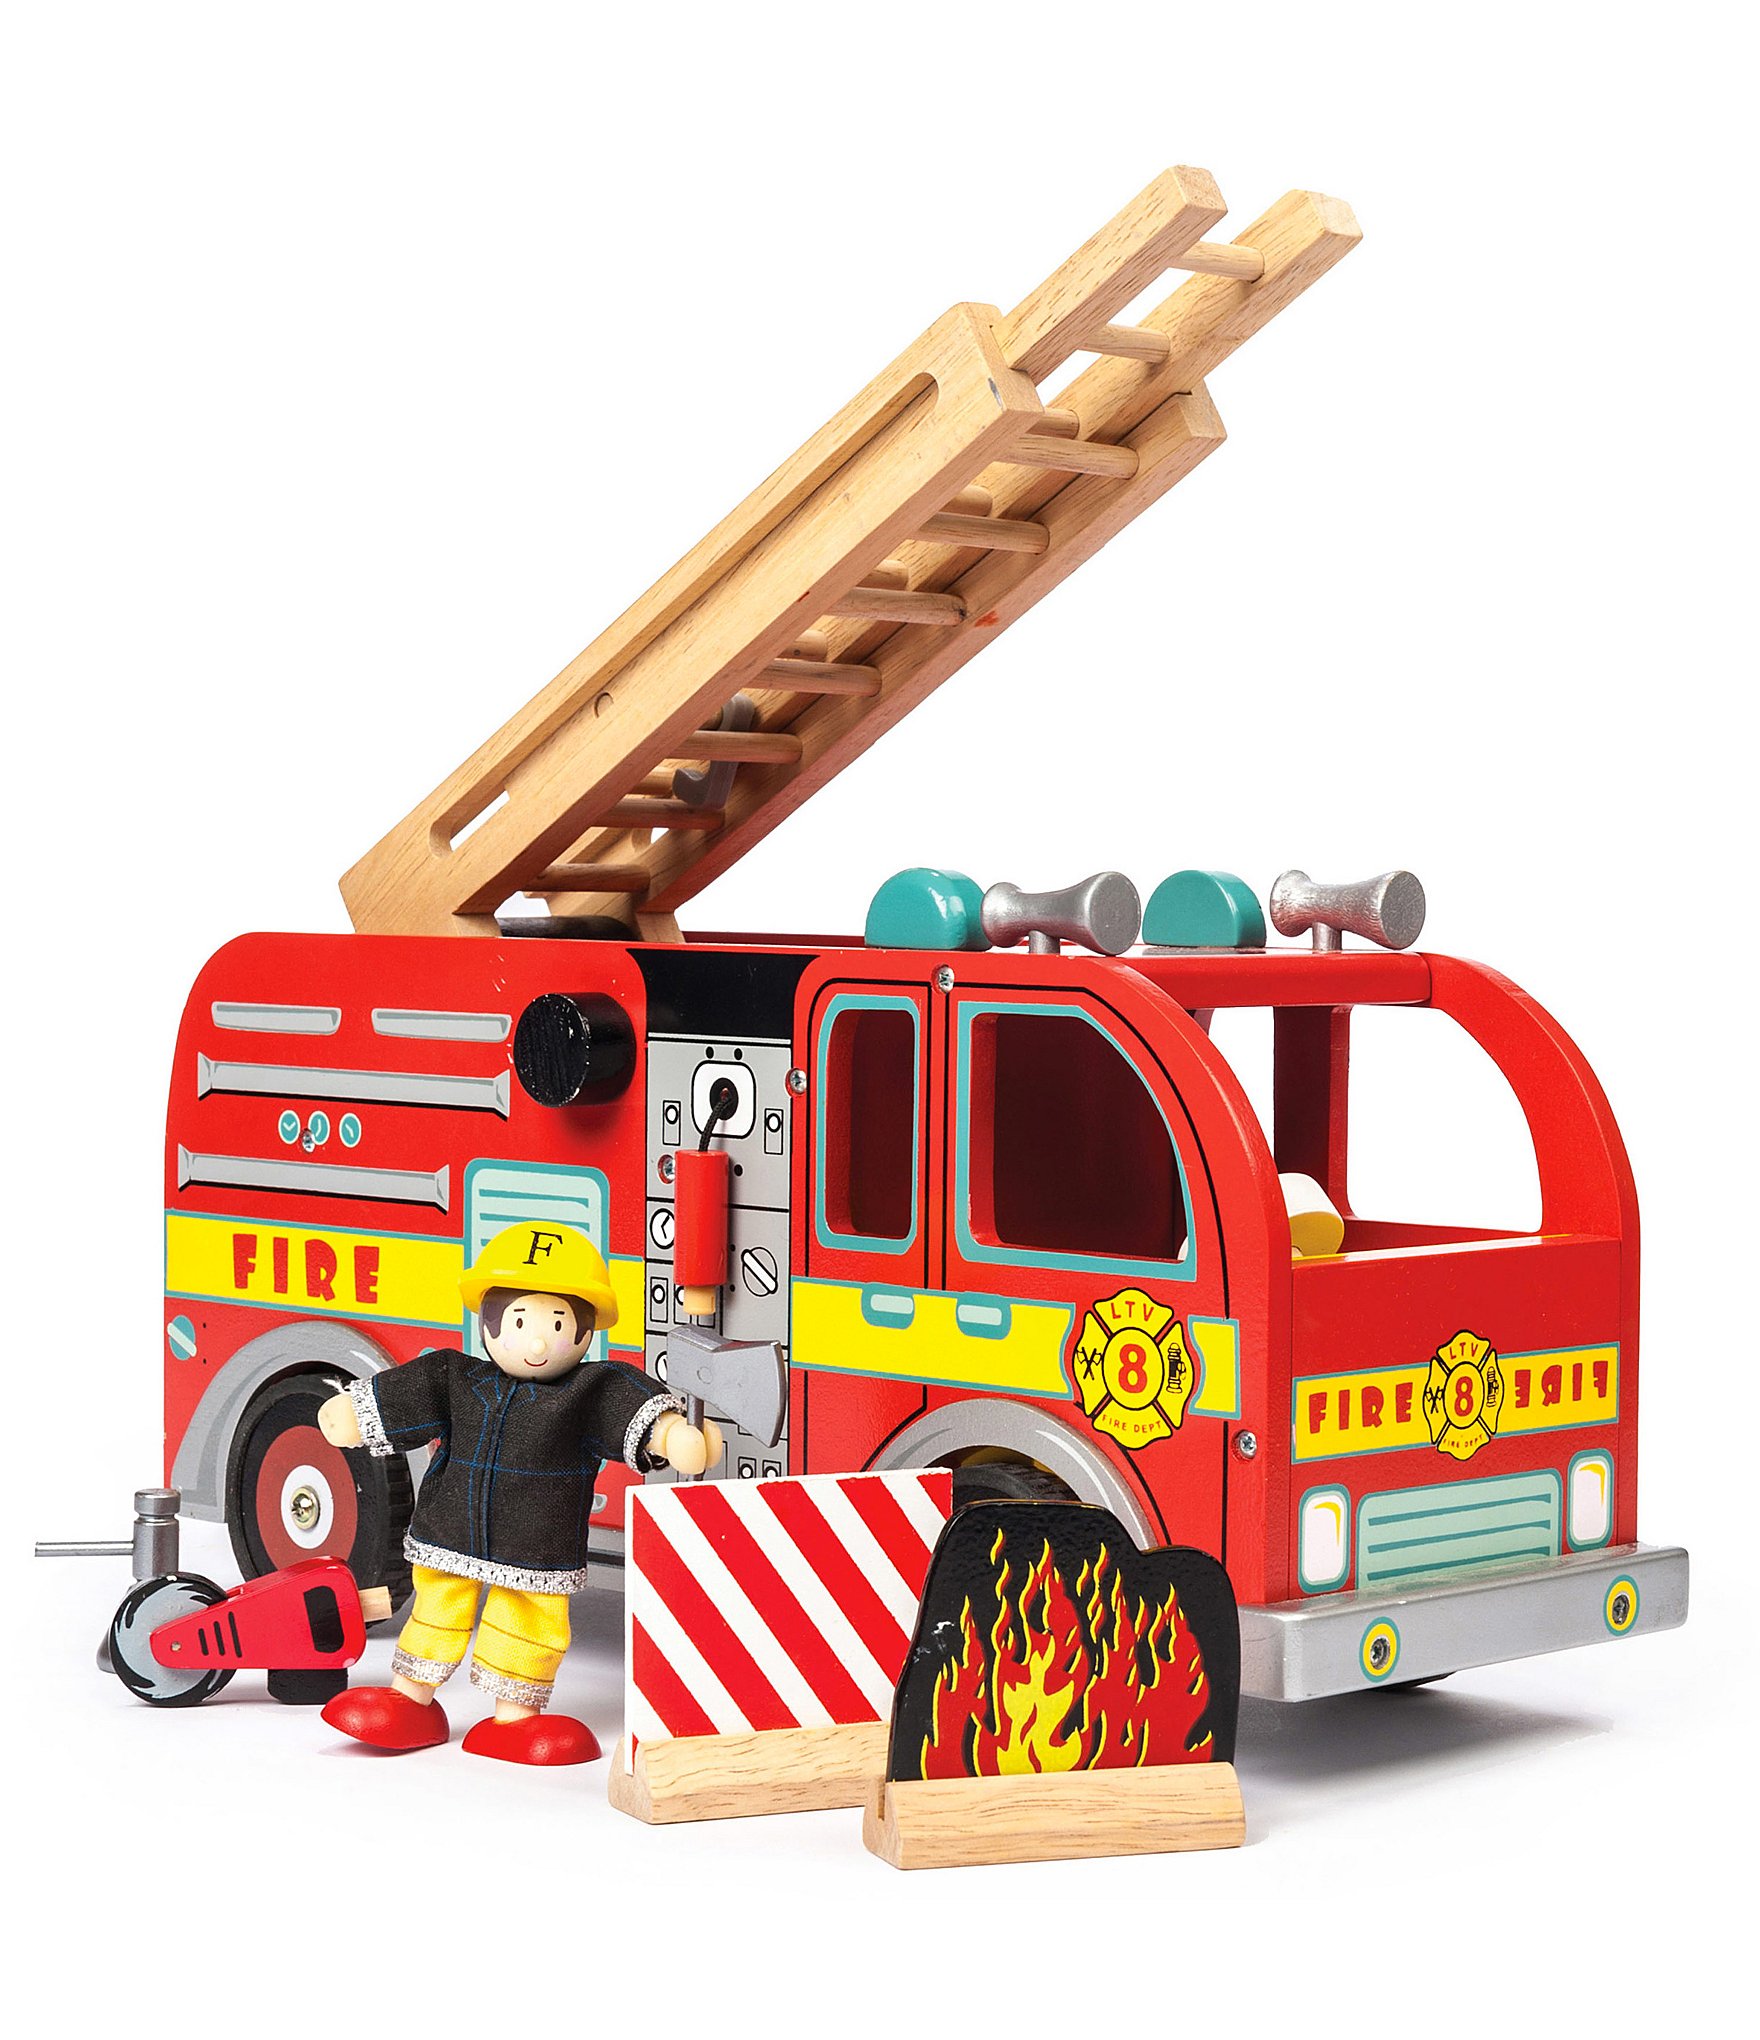 Le Toy Van Honeybake Wooden Fire Engine Truck Firefighter Set